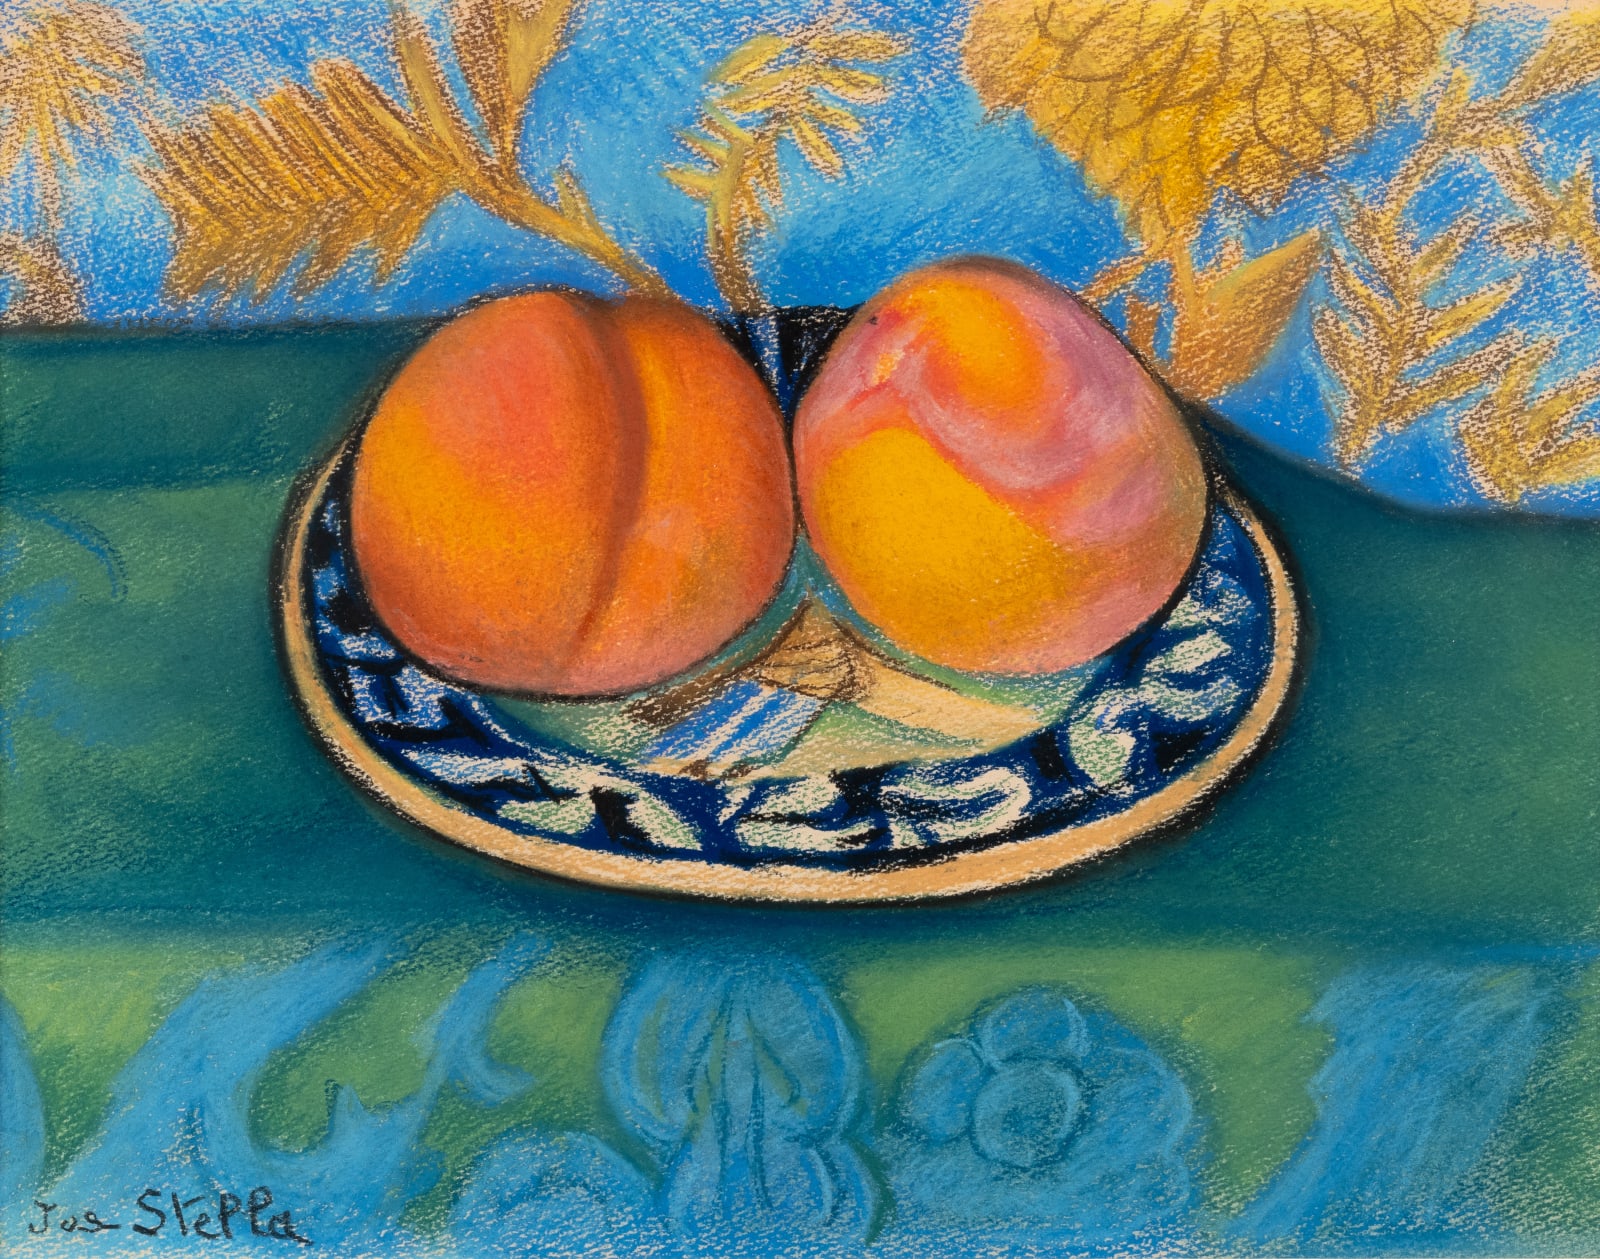 Joseph Stella, Untitled (Still Life with Peaches), undated